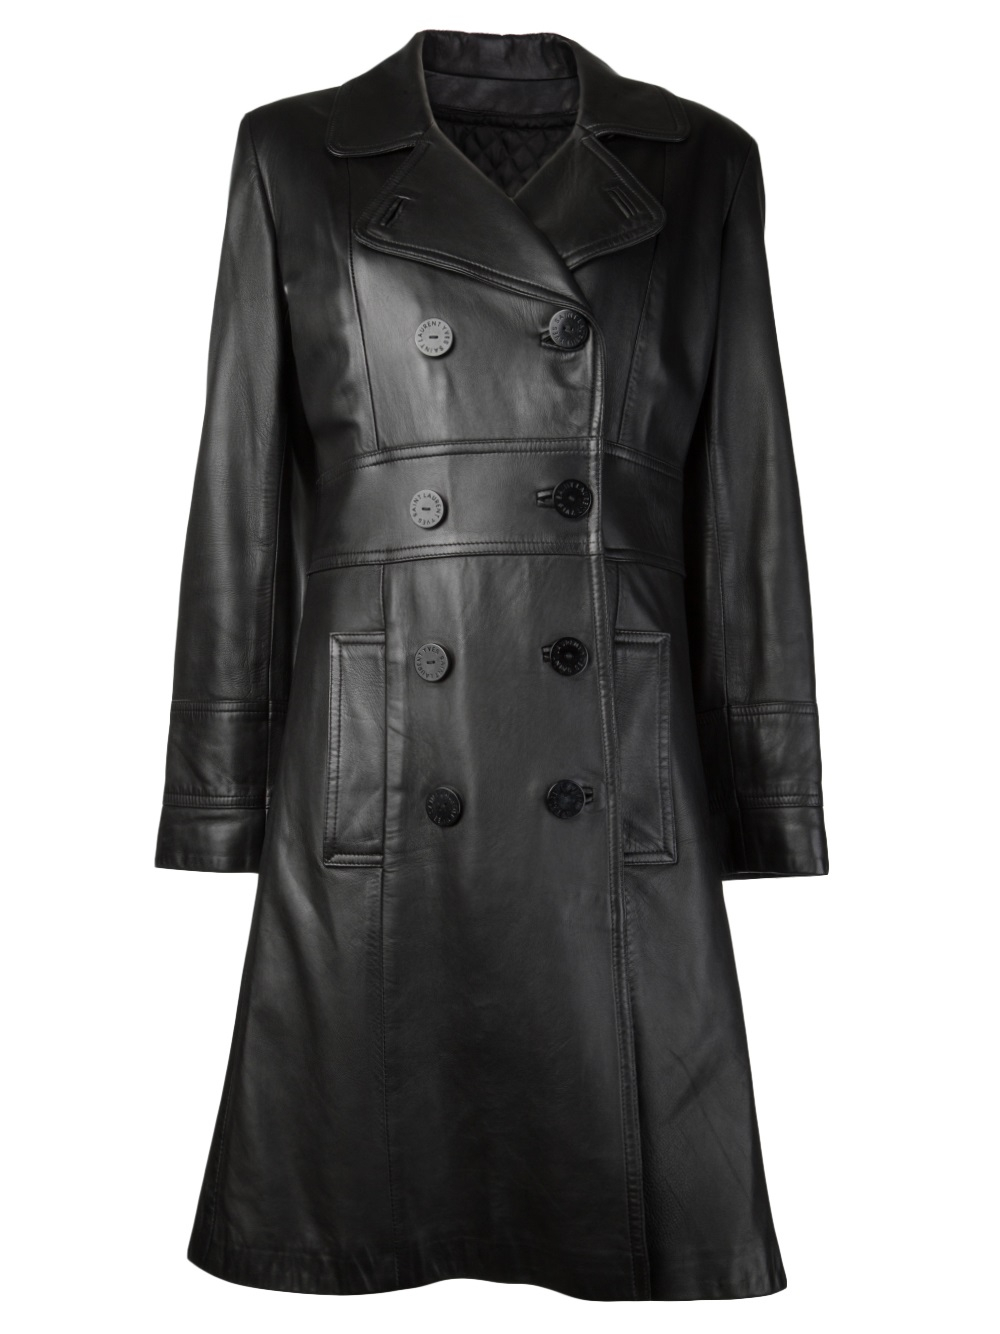 Yves Saint Laurent Vintage Trench Coat in Black | Lyst